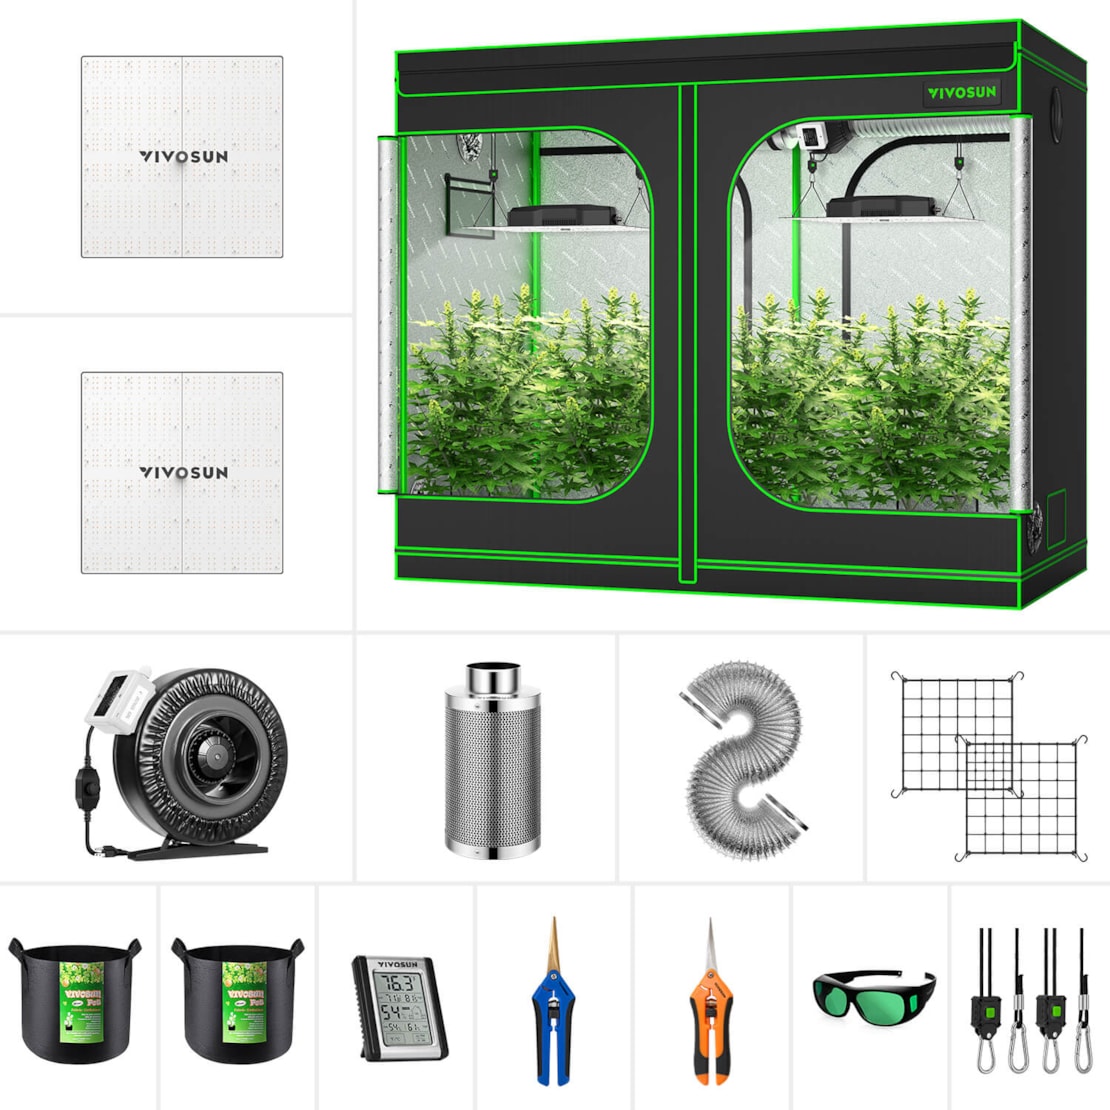 VIVOSUN GIY 8 x 4 ft. Complete Grow Kit with 2x VS4000 LED Grow Light, 96" x 48" x 80"